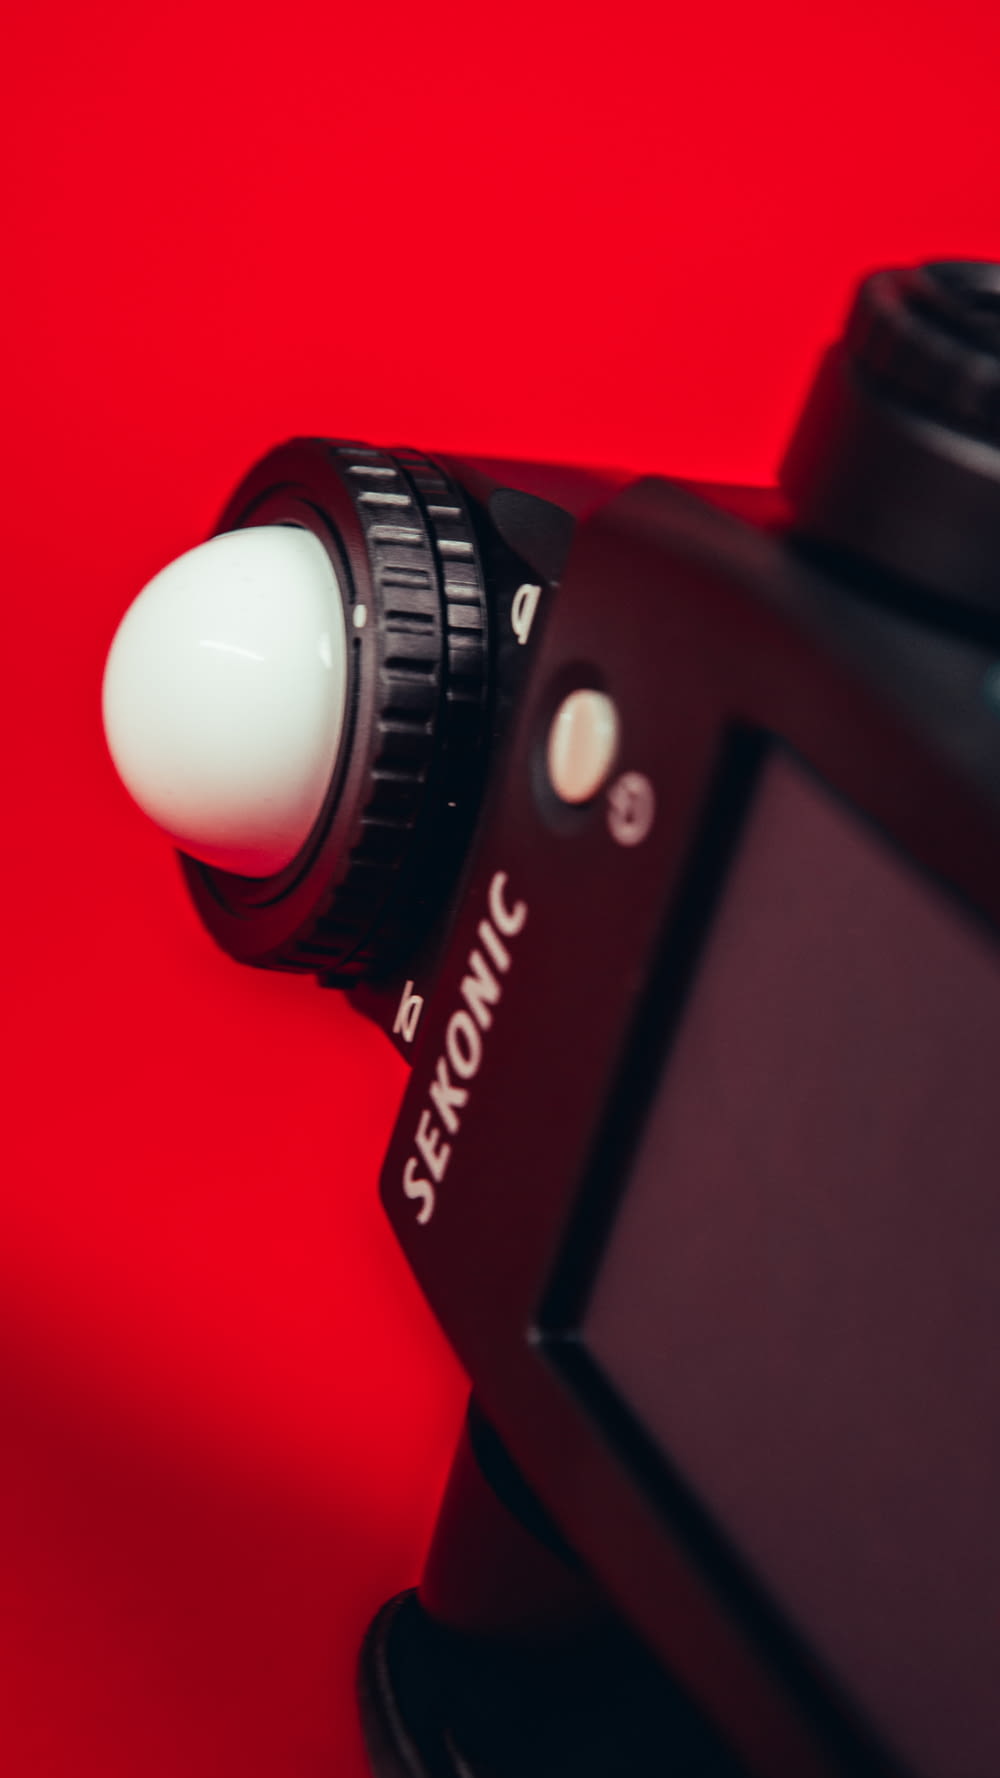 black canon dslr camera on red textile